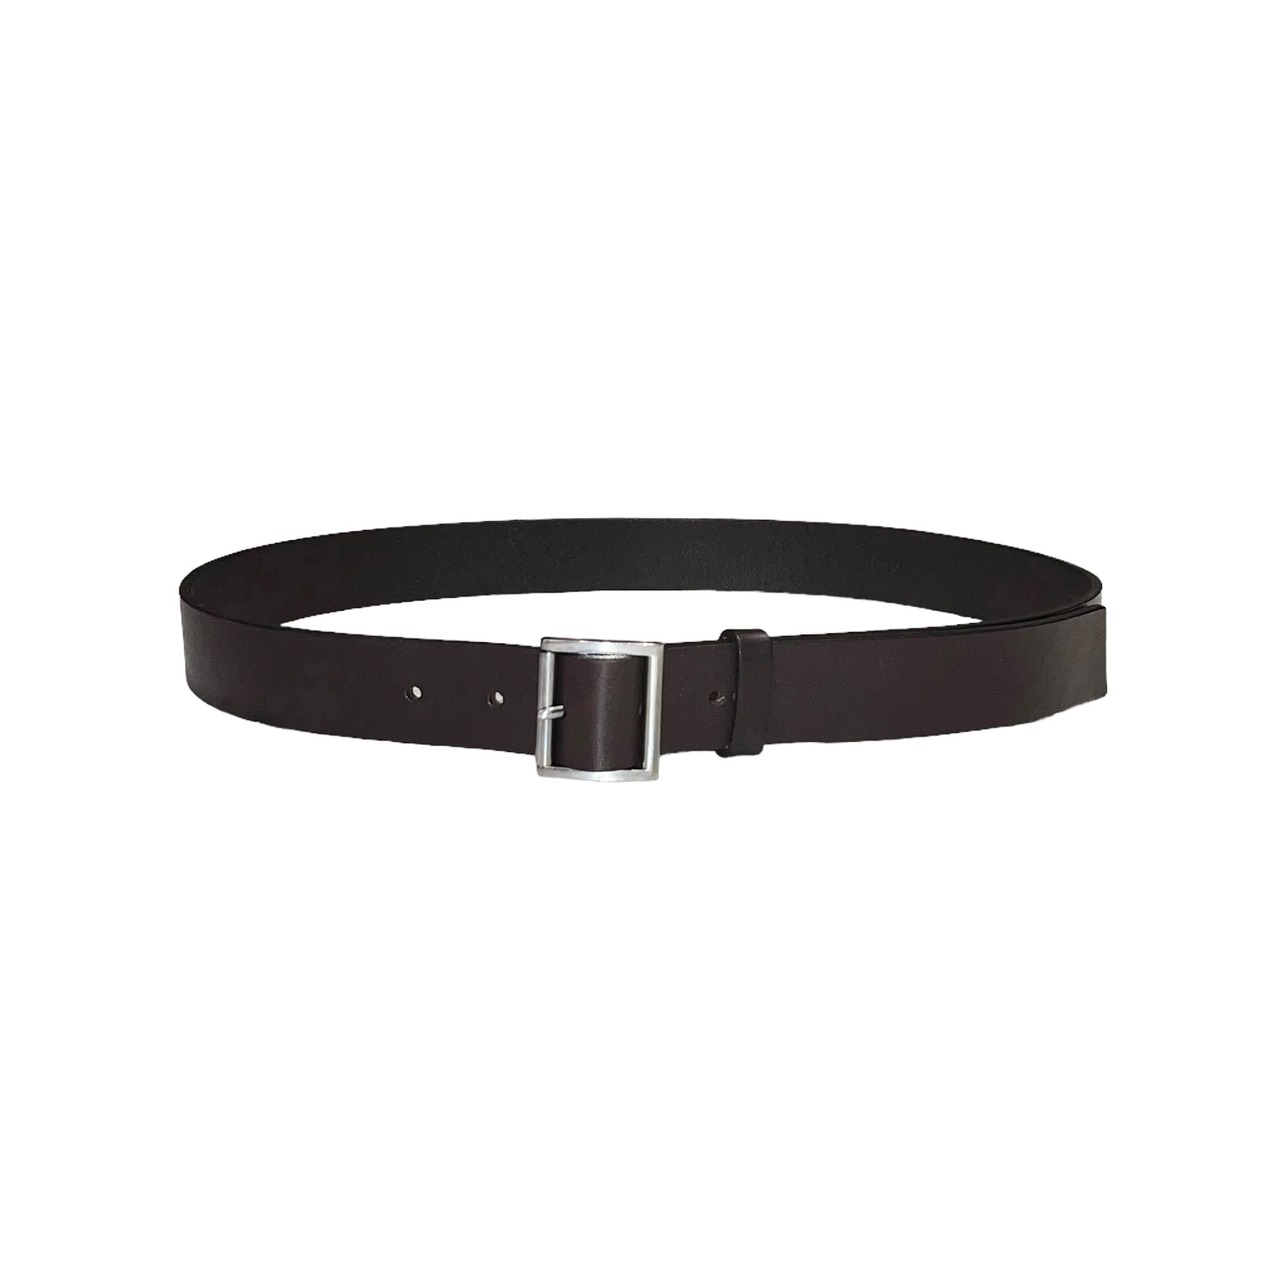 PRADA dark brown leather belt